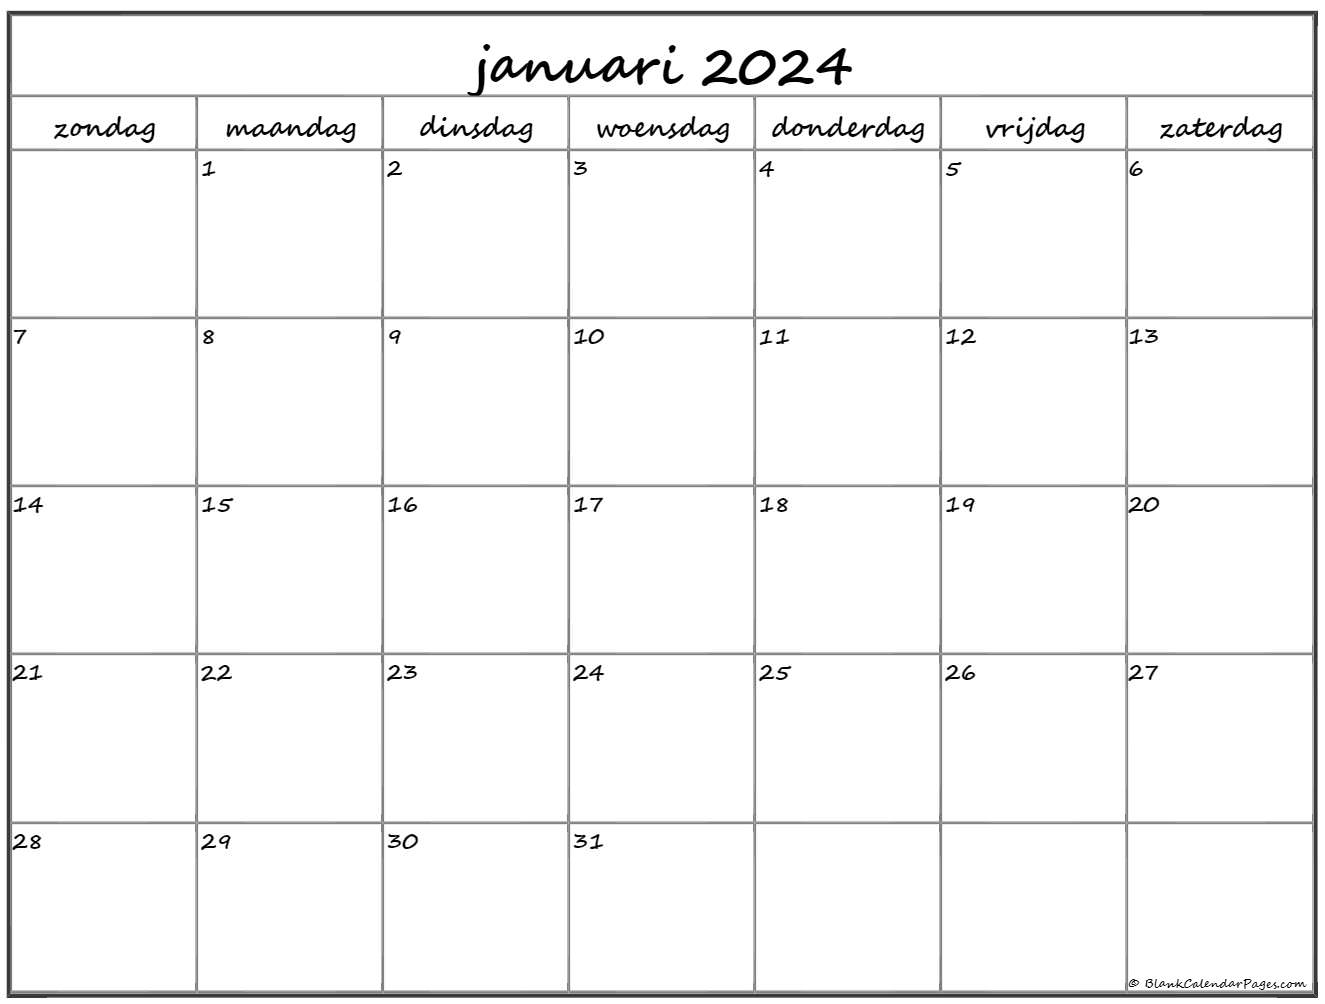 tijger Wig Rondlopen januari 2022 kalender Nederlandse | Kalender januari